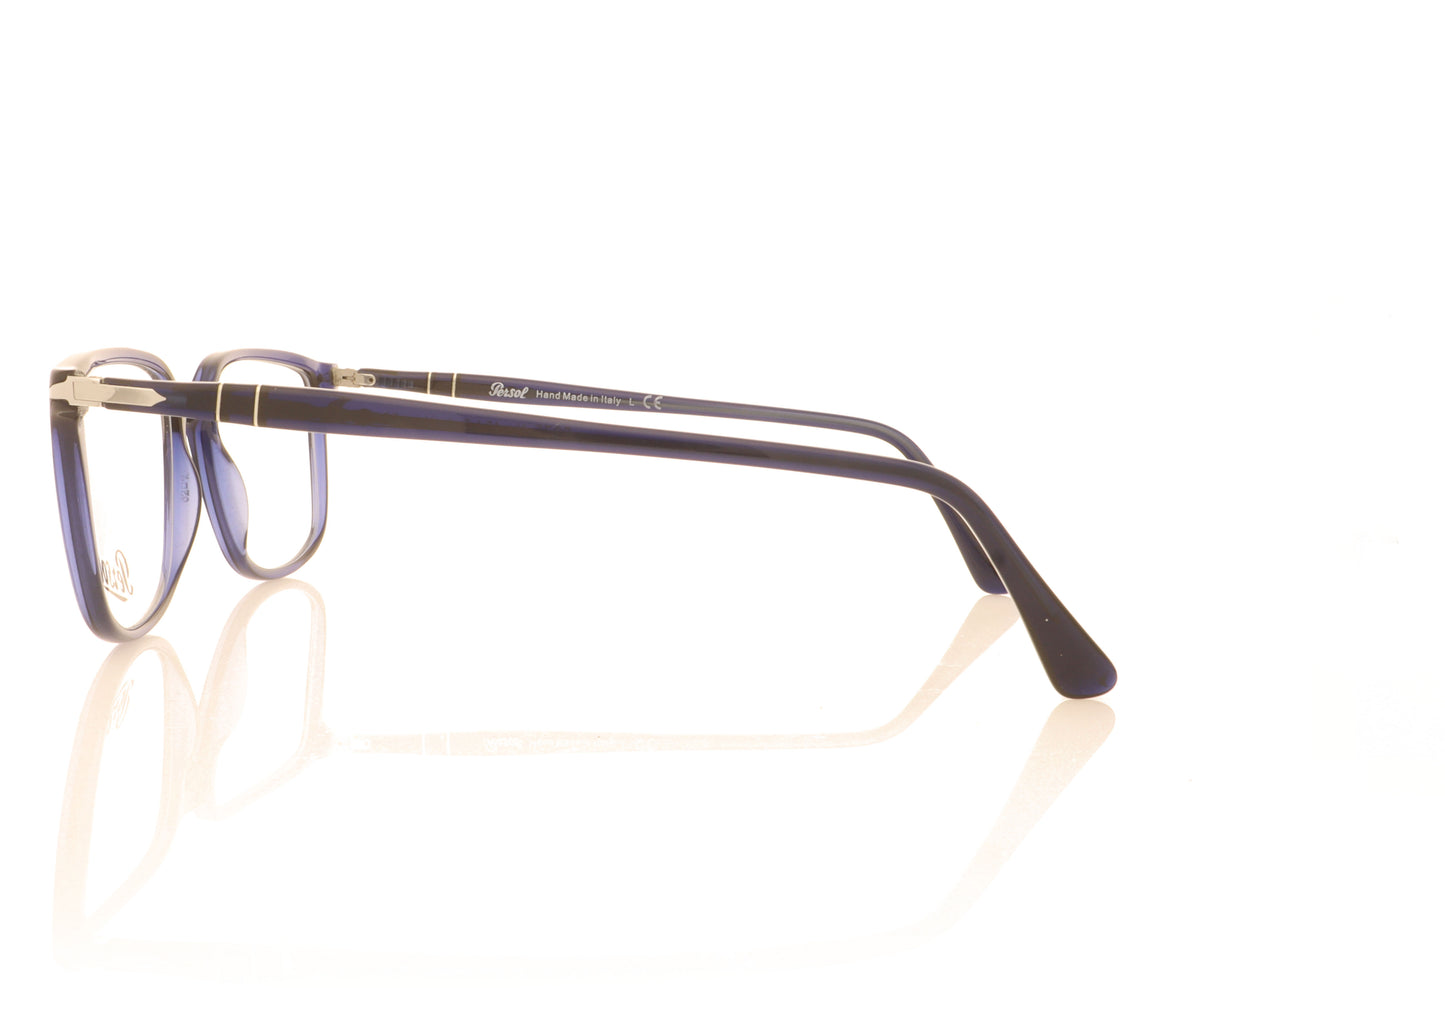 Persol 3275-V 181 Cobalto Glasses - Side